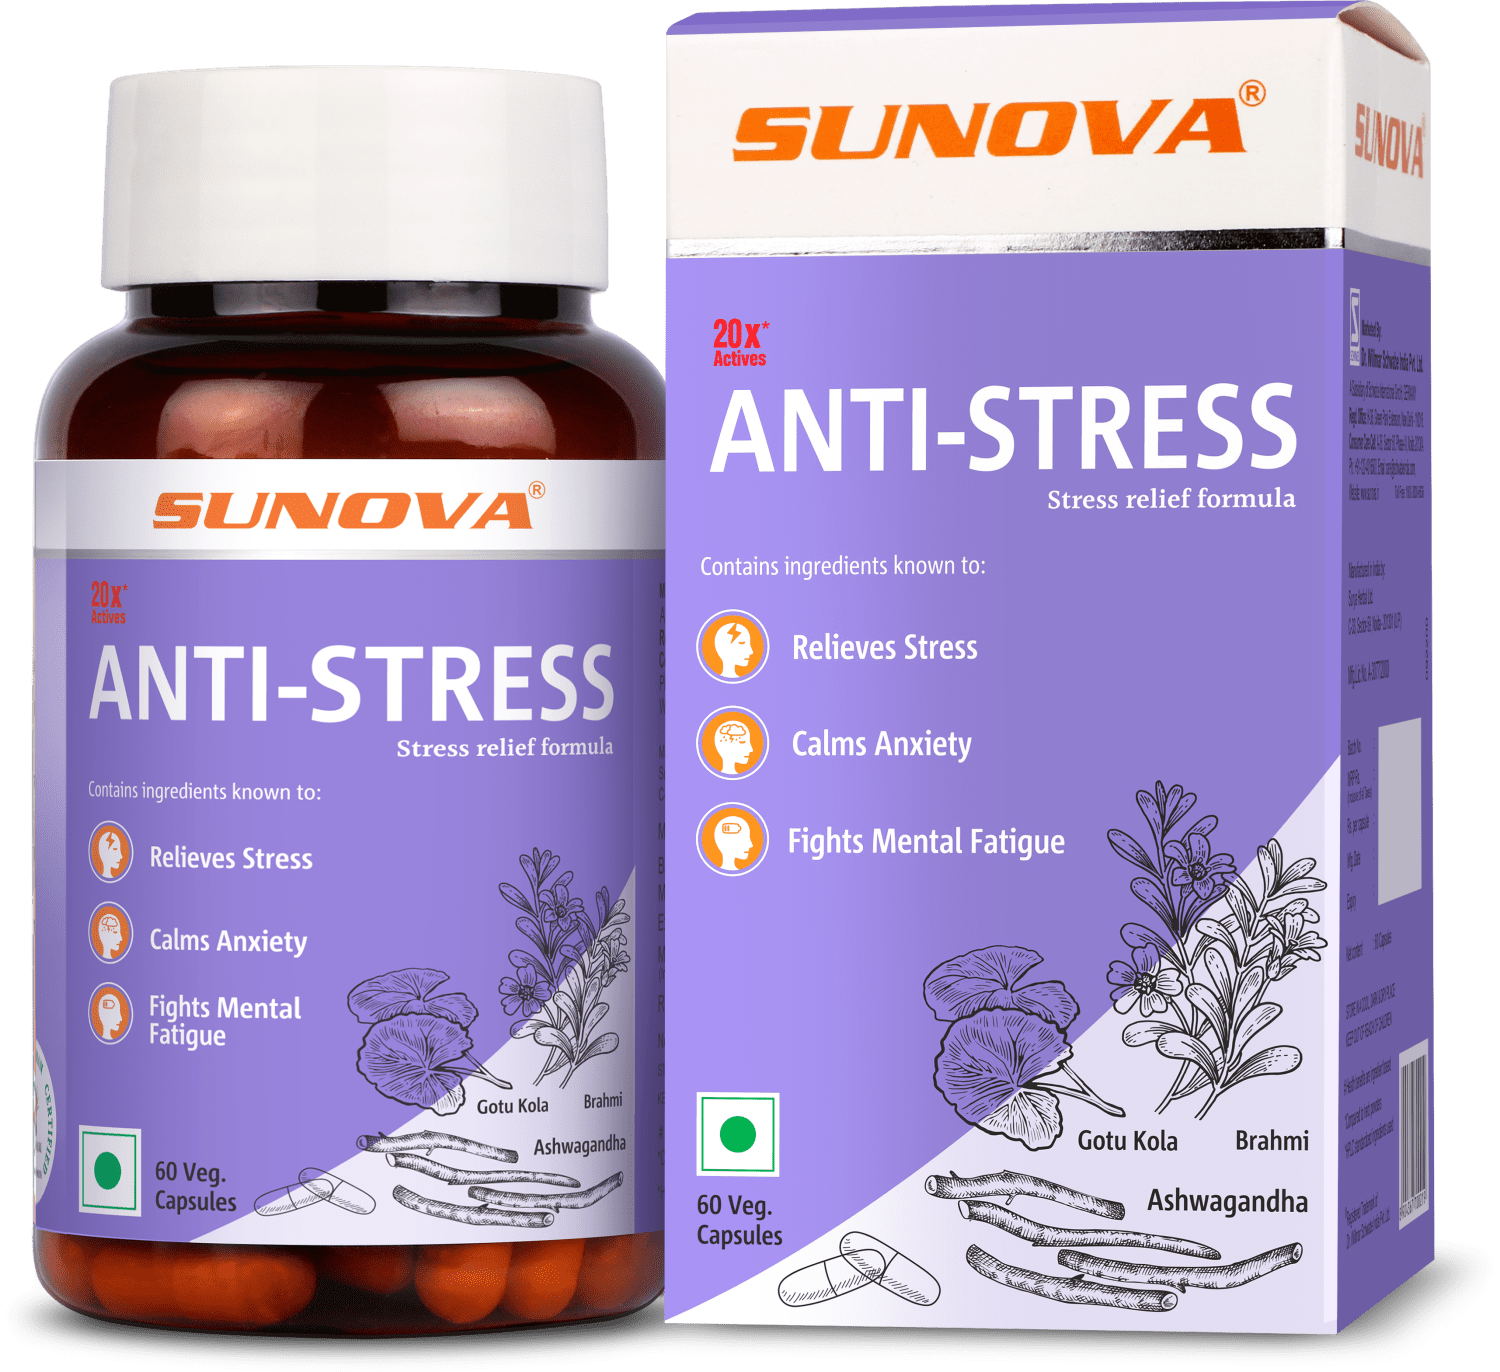 Sunova Anti stress new pack